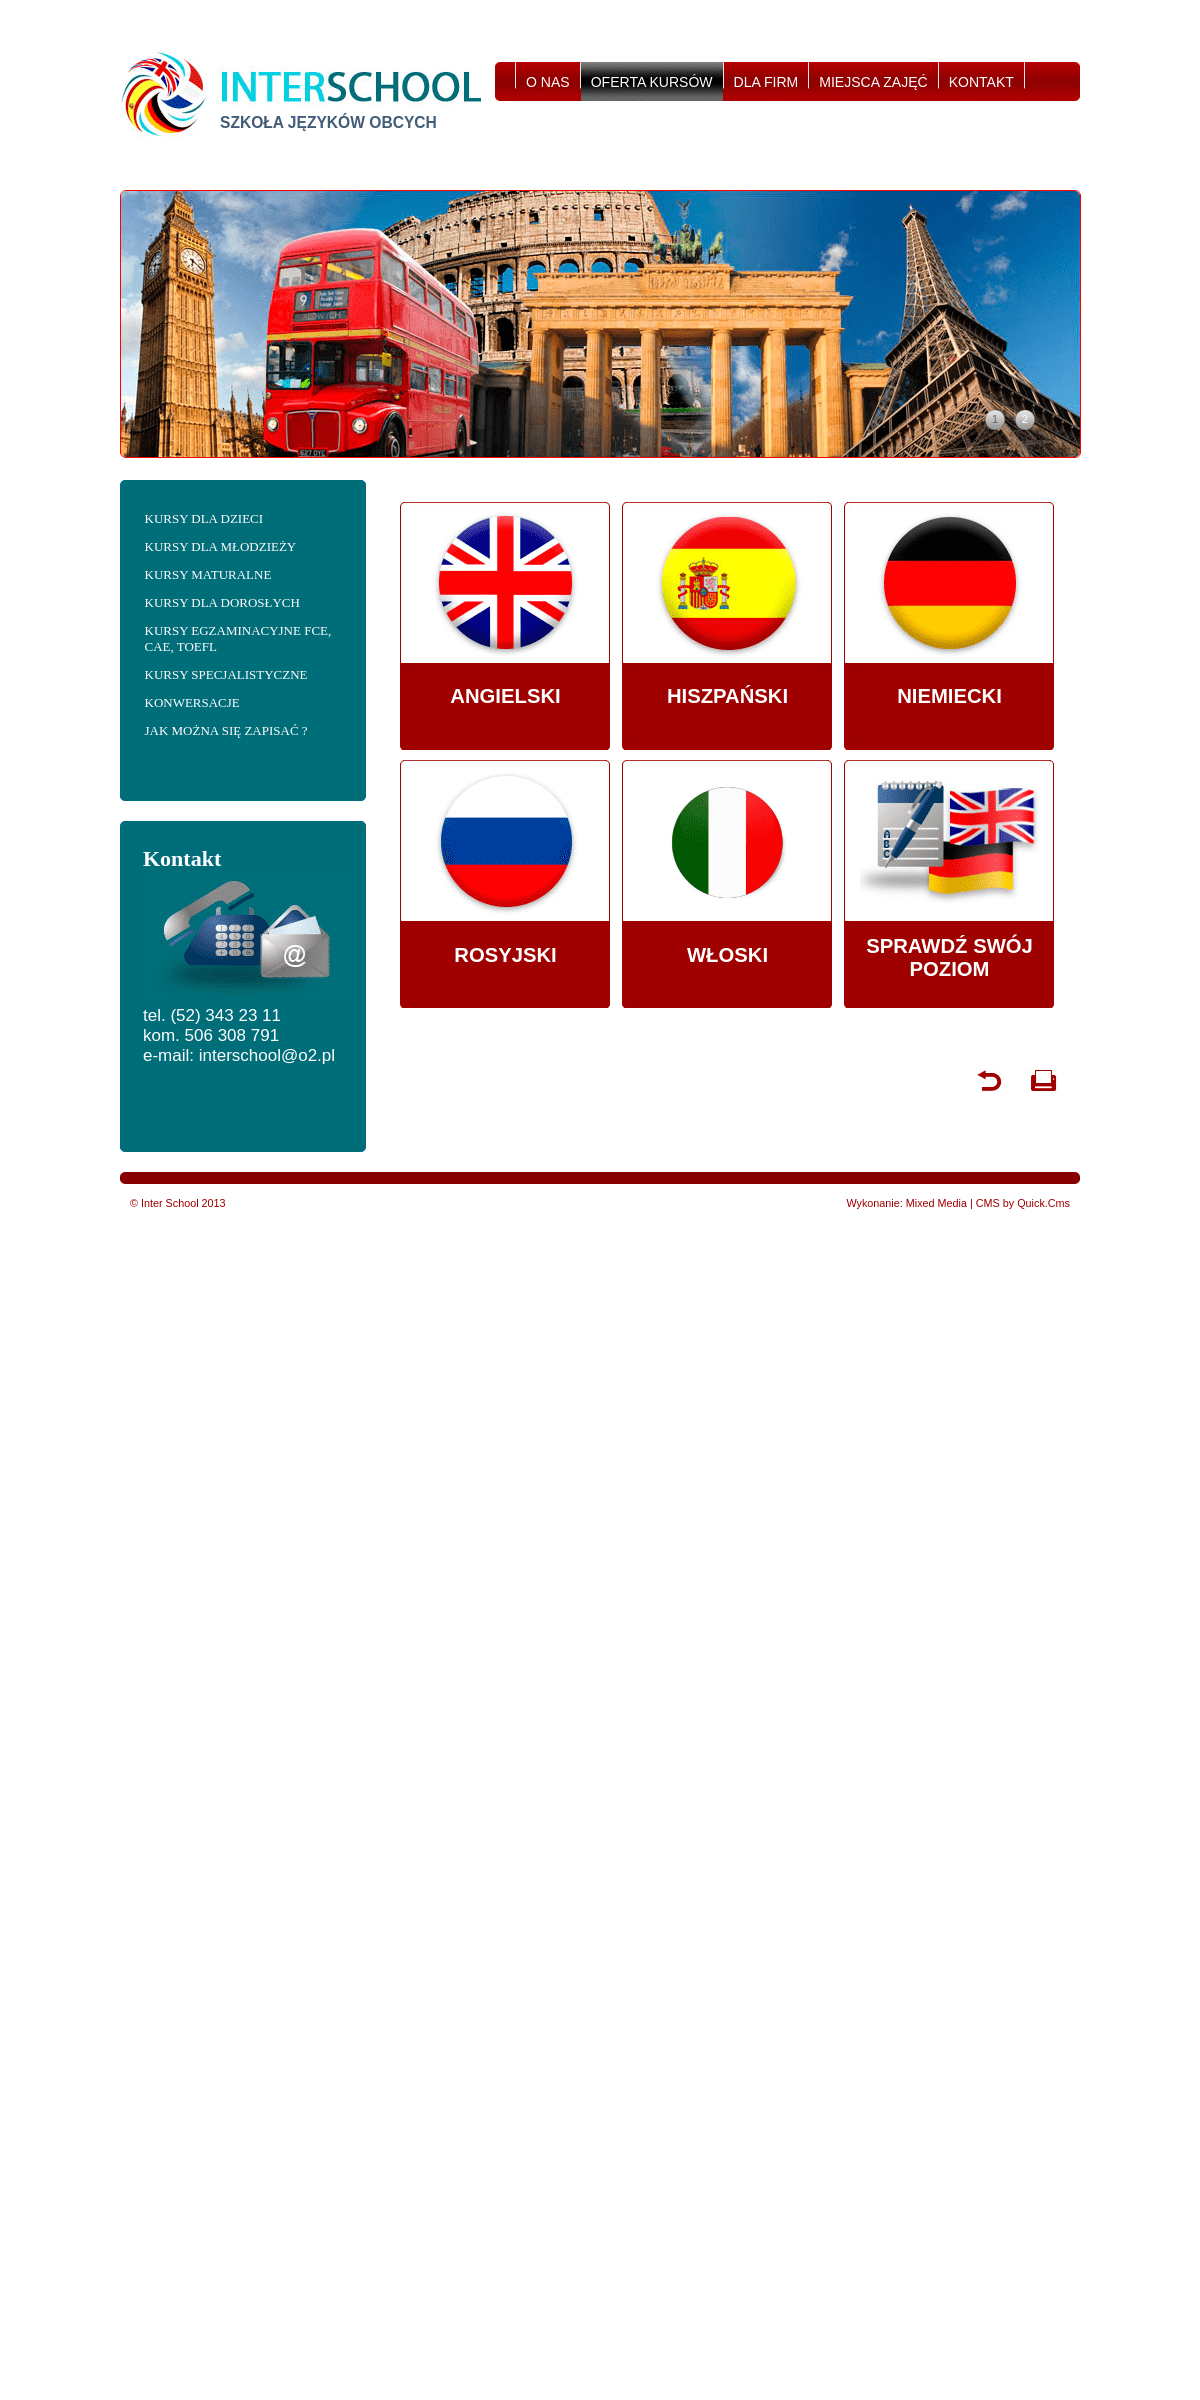 A complete backup of interschool.com.pl